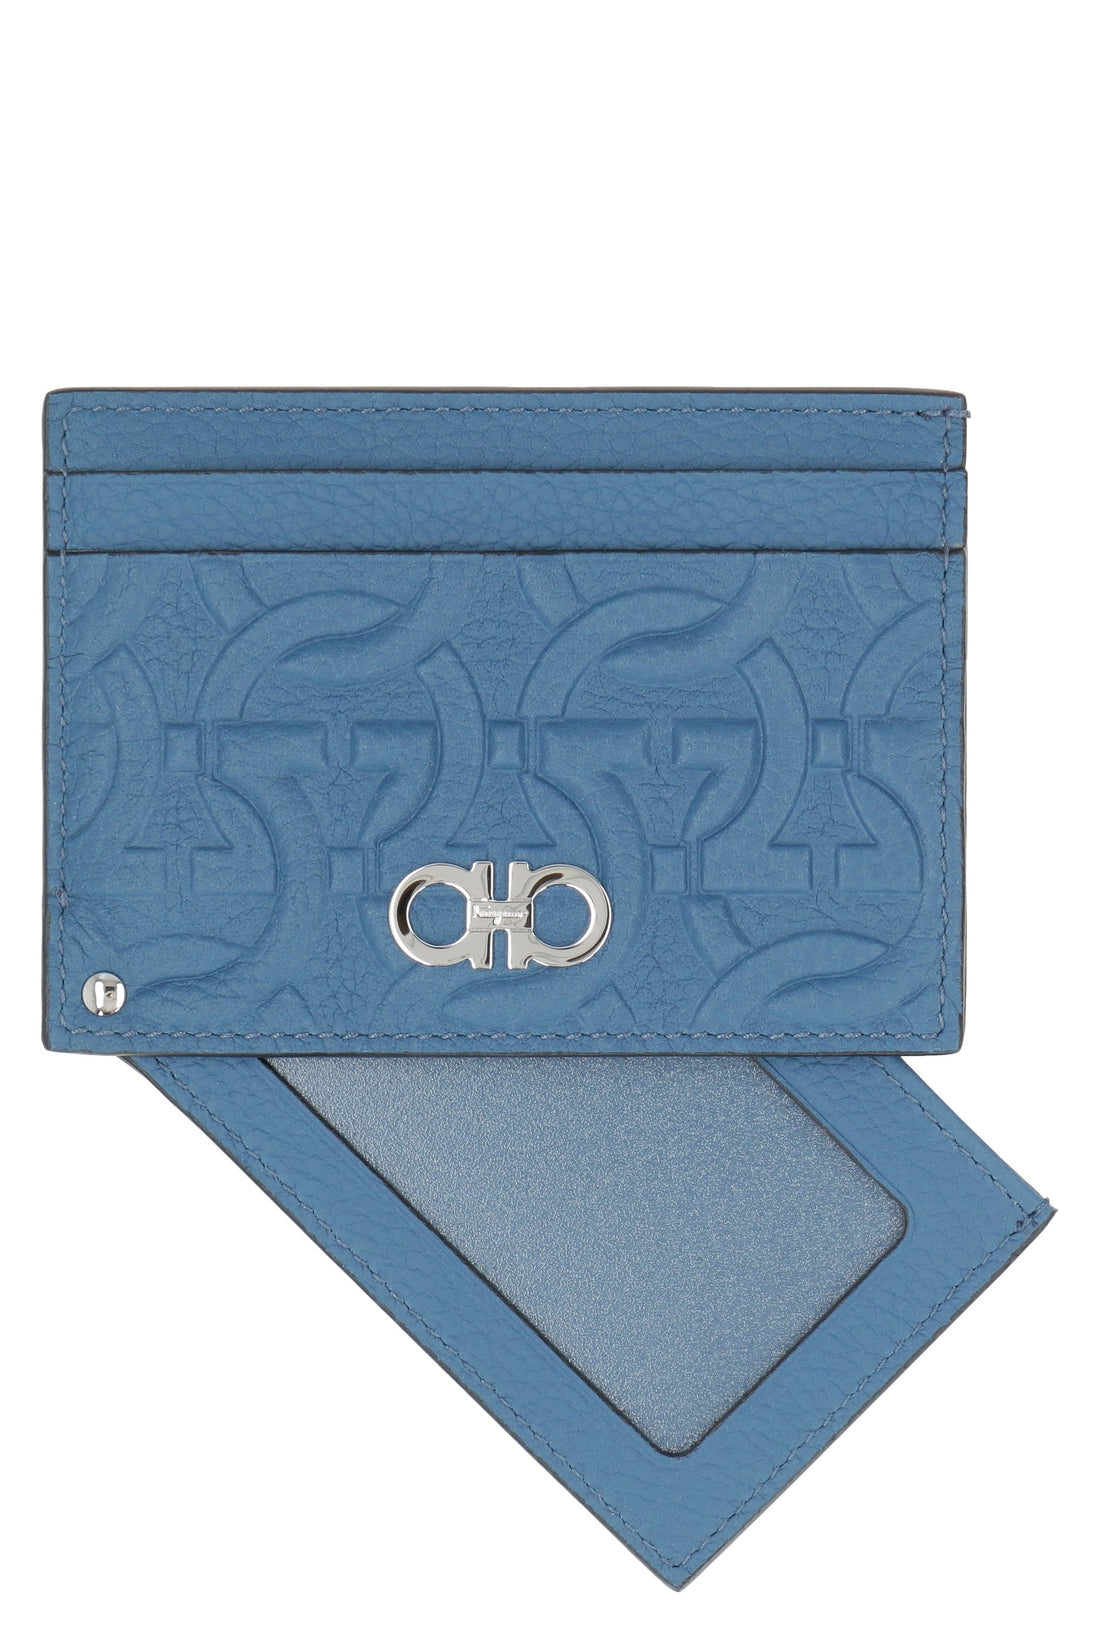 FERRAGAMO-OUTLET-SALE-Gancini Leather card holder-ARCHIVIST